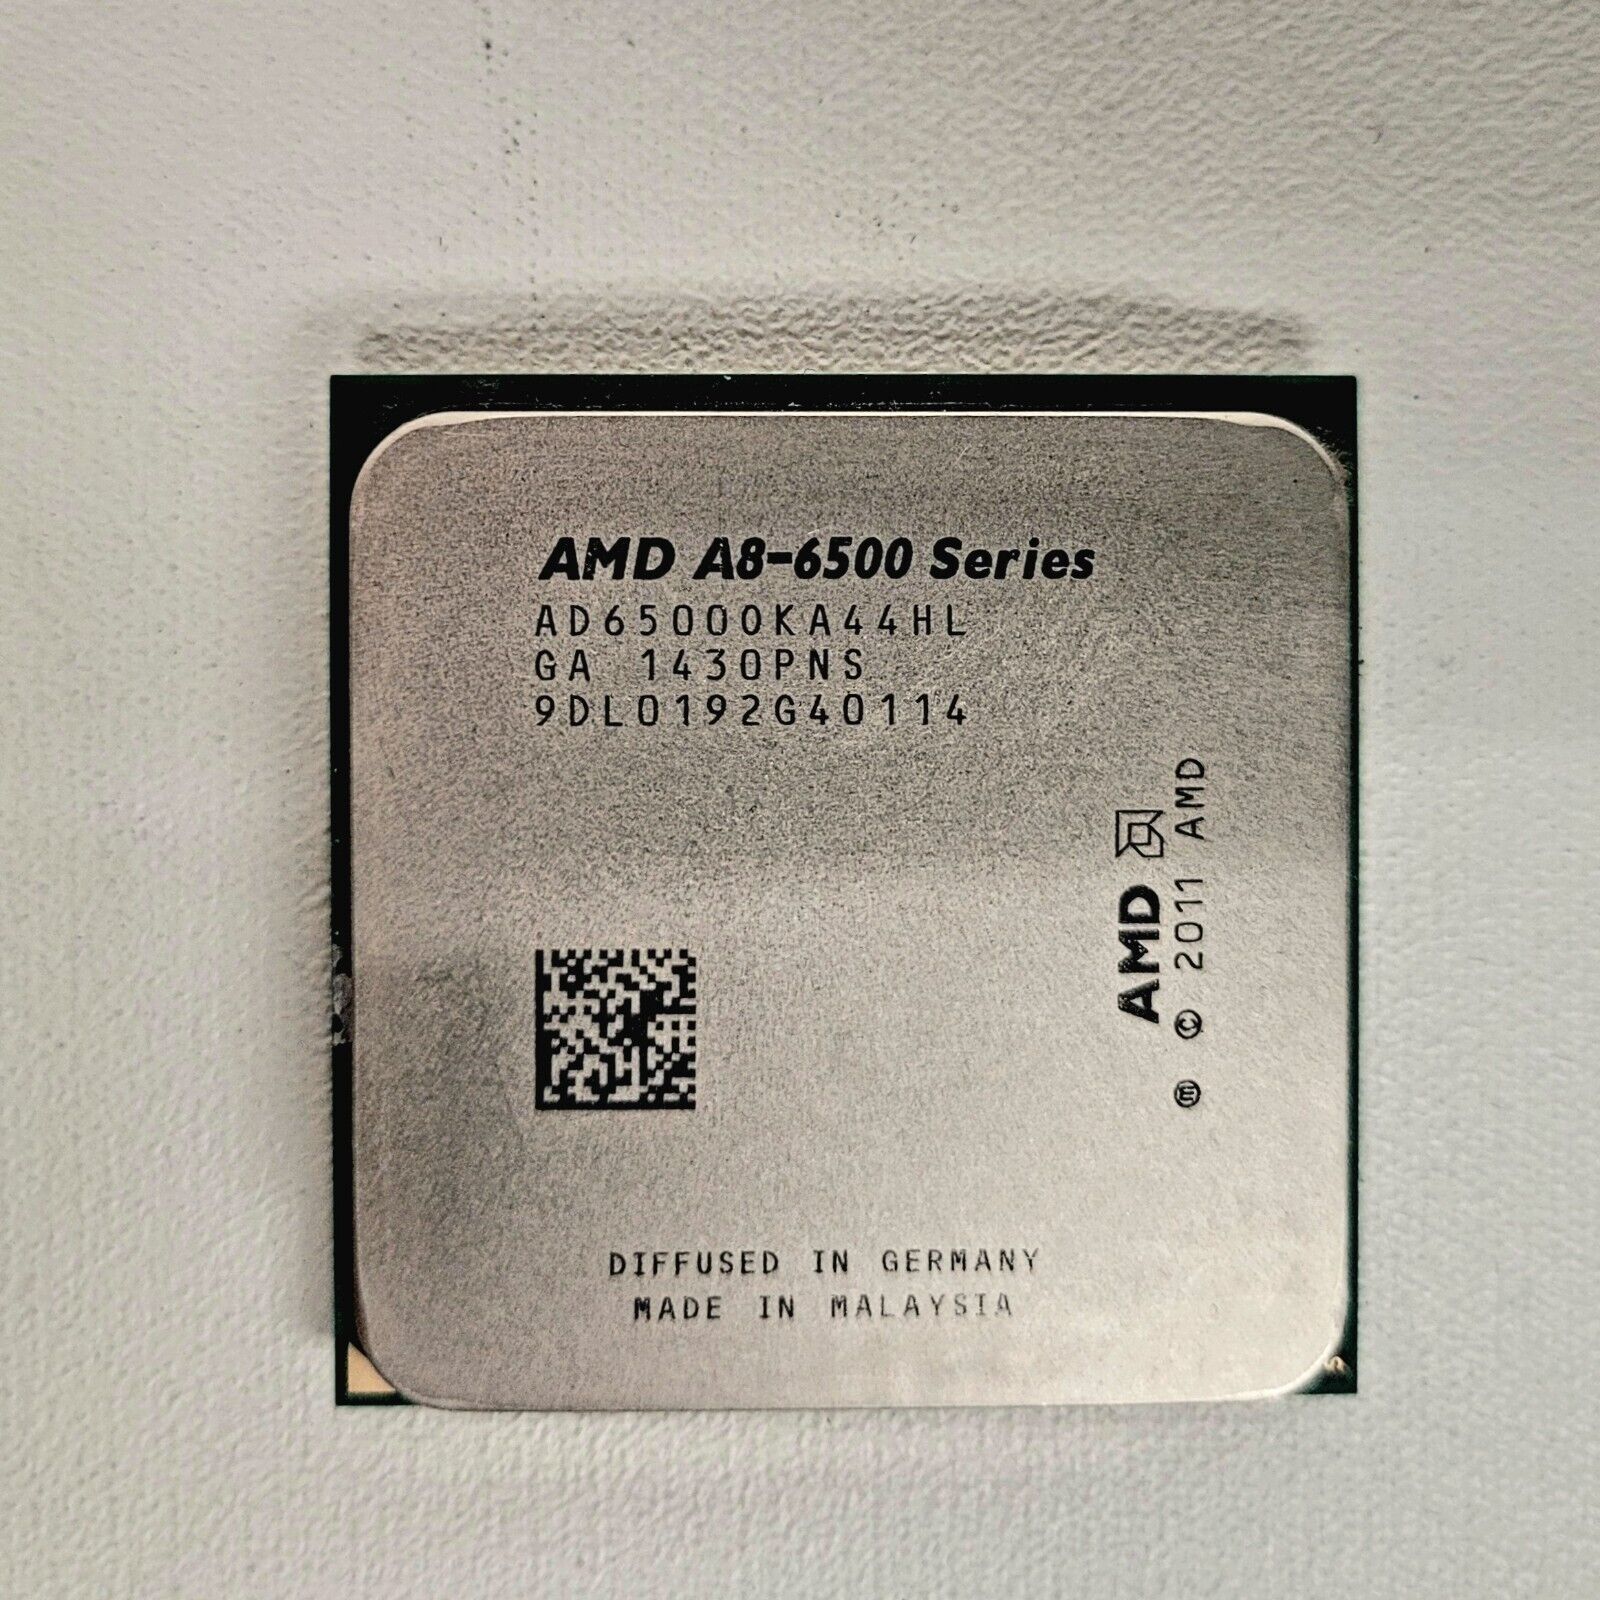 AMD A8-6500 Series AD6500OKA44HL CPU Processor - A Series - Parts Salvage Repair